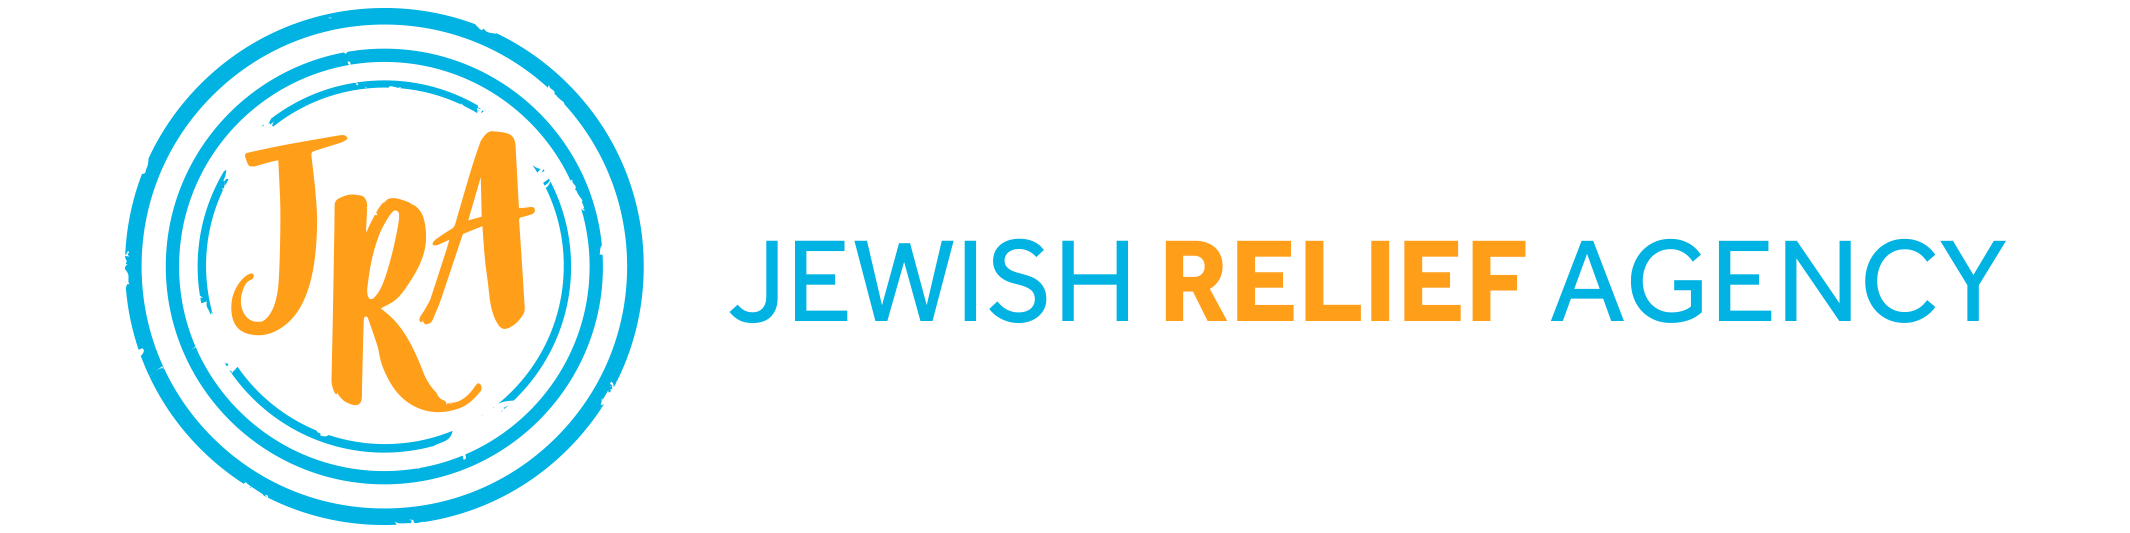 Jewish Relief Agency